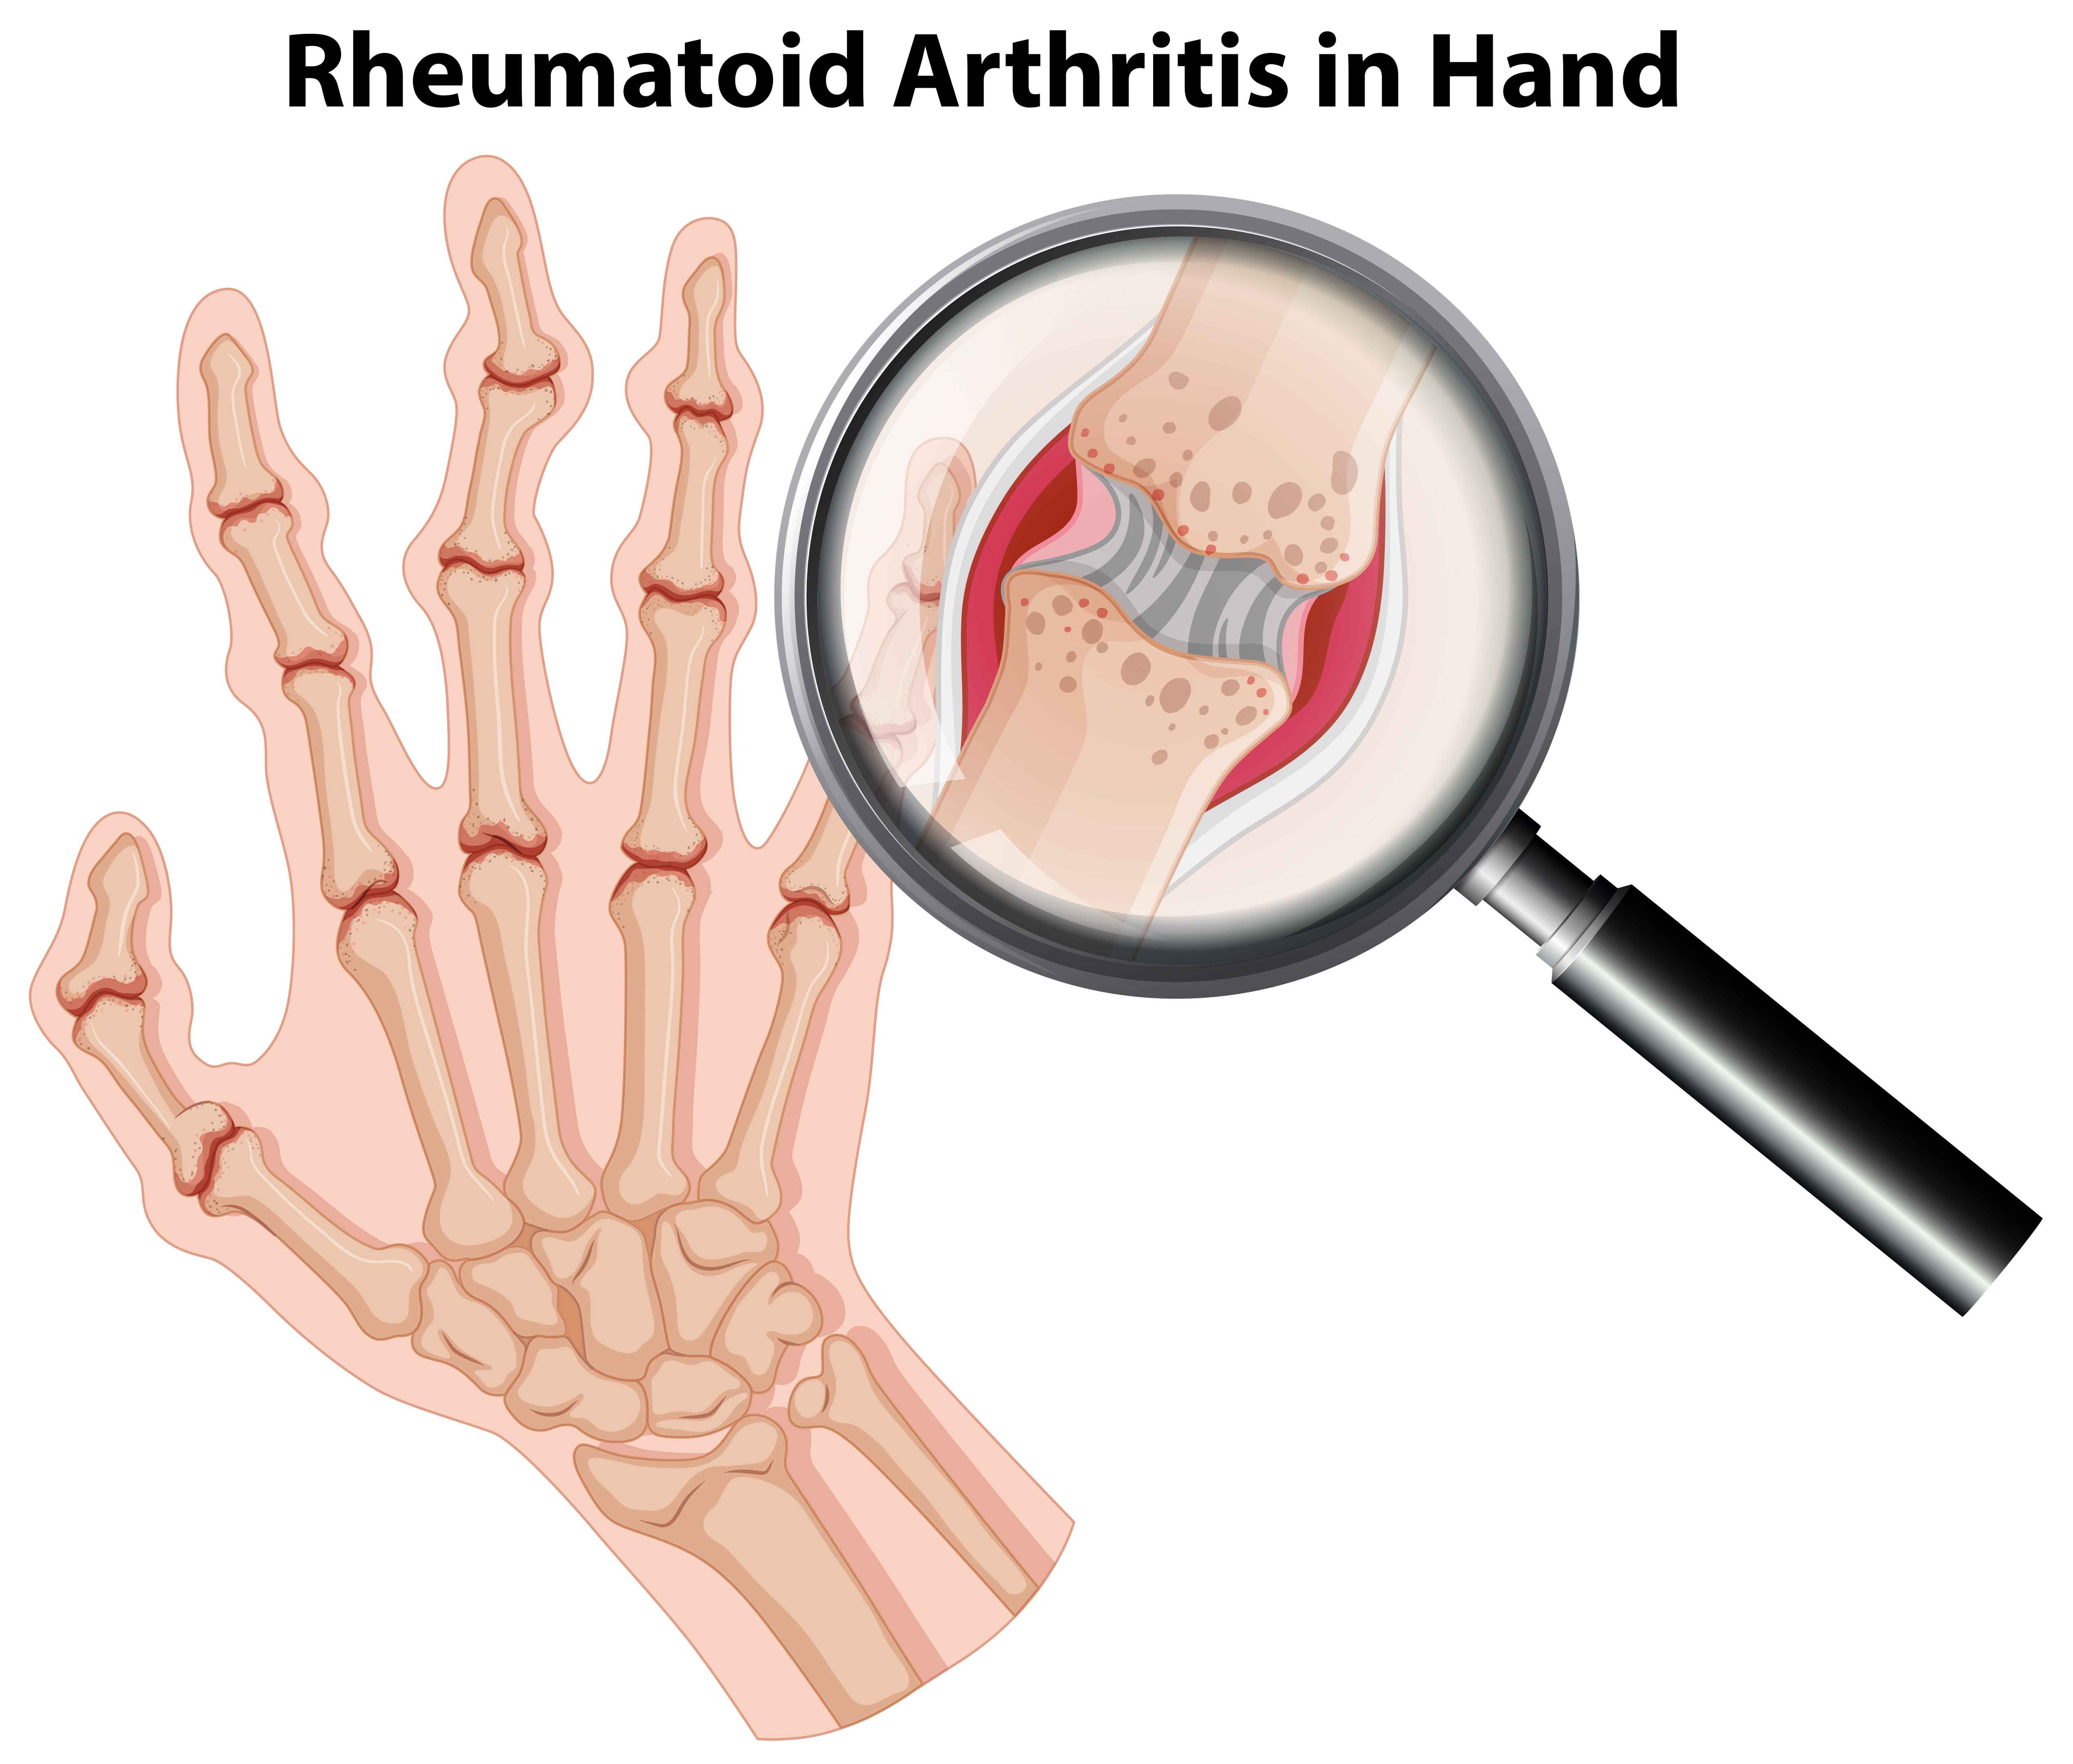 Visual description of human hand anatomy while rheumatoid arthritis is magnified